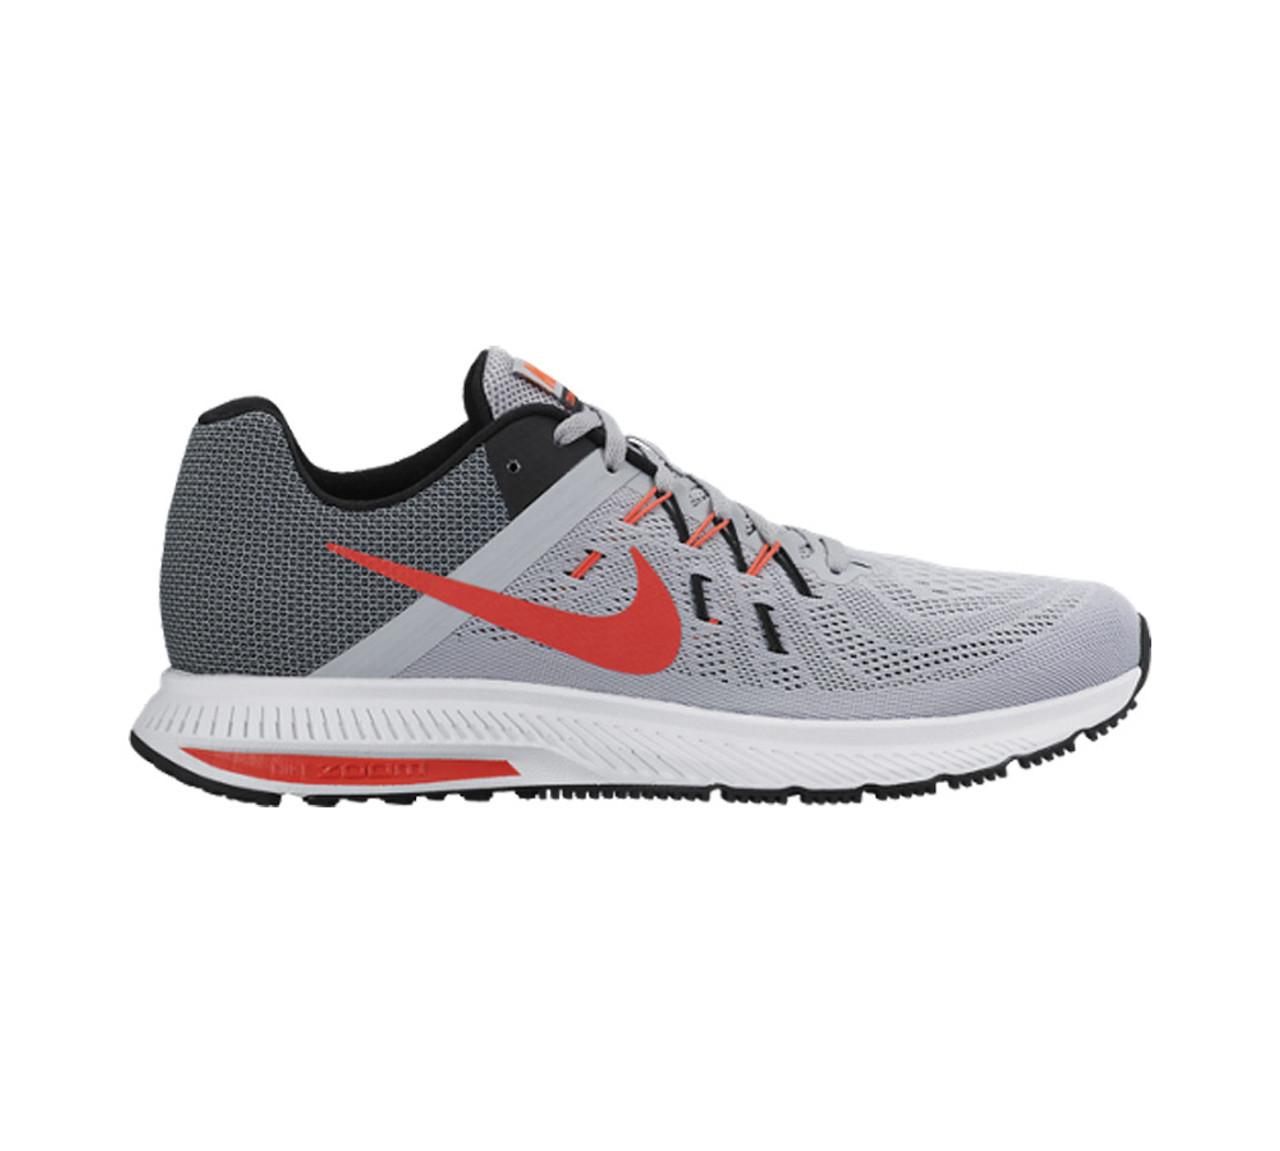 Nike Men's Zoom Winflo 2 Running Shoe - Grey | Discount Nike Men's Athletic & More - Shoolu.com Shoolu.com